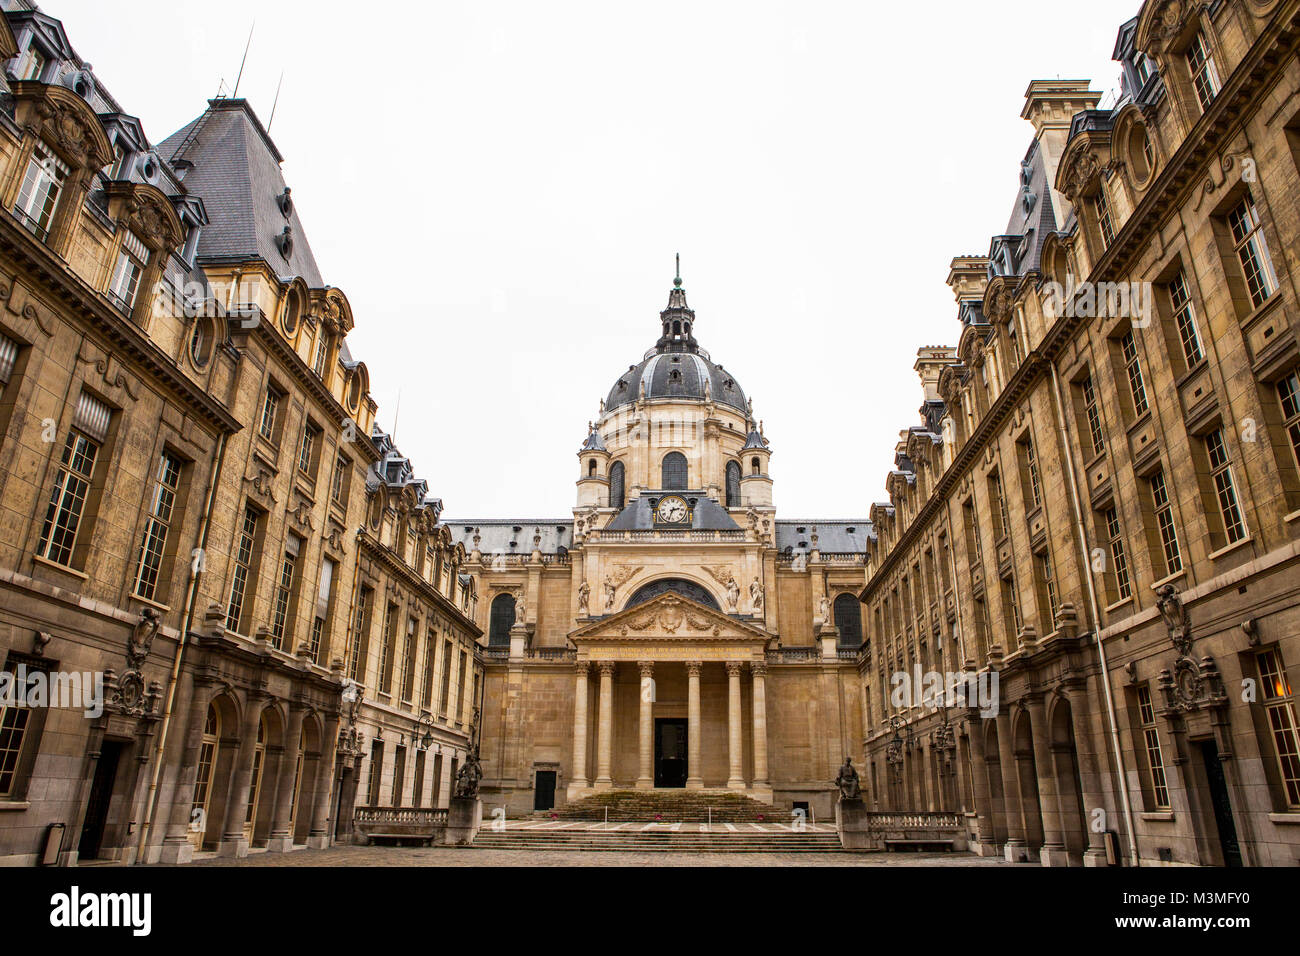 Parigi, Francia - 10 luglio 2014: l'Università di Parigi ( Universite de Paris ), alla Sorbona, famosa università di Parigi, fondata da Robert de Foto Stock